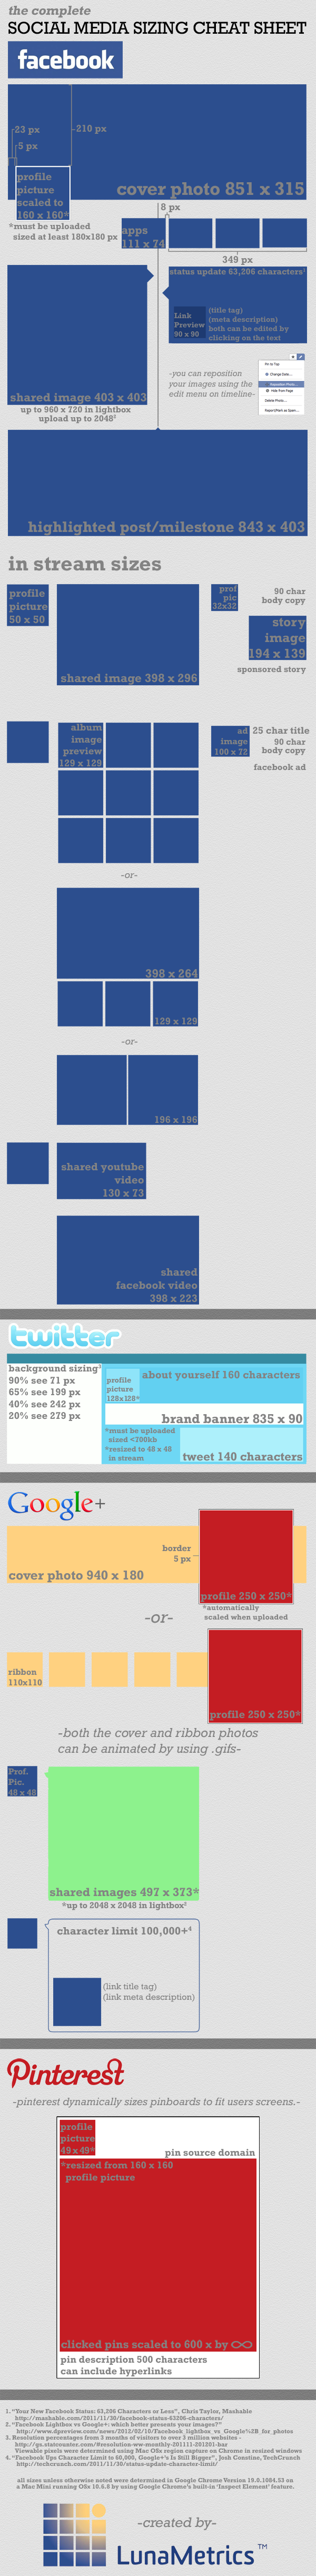 Social Media Cheat Sheet by LunaMetrics